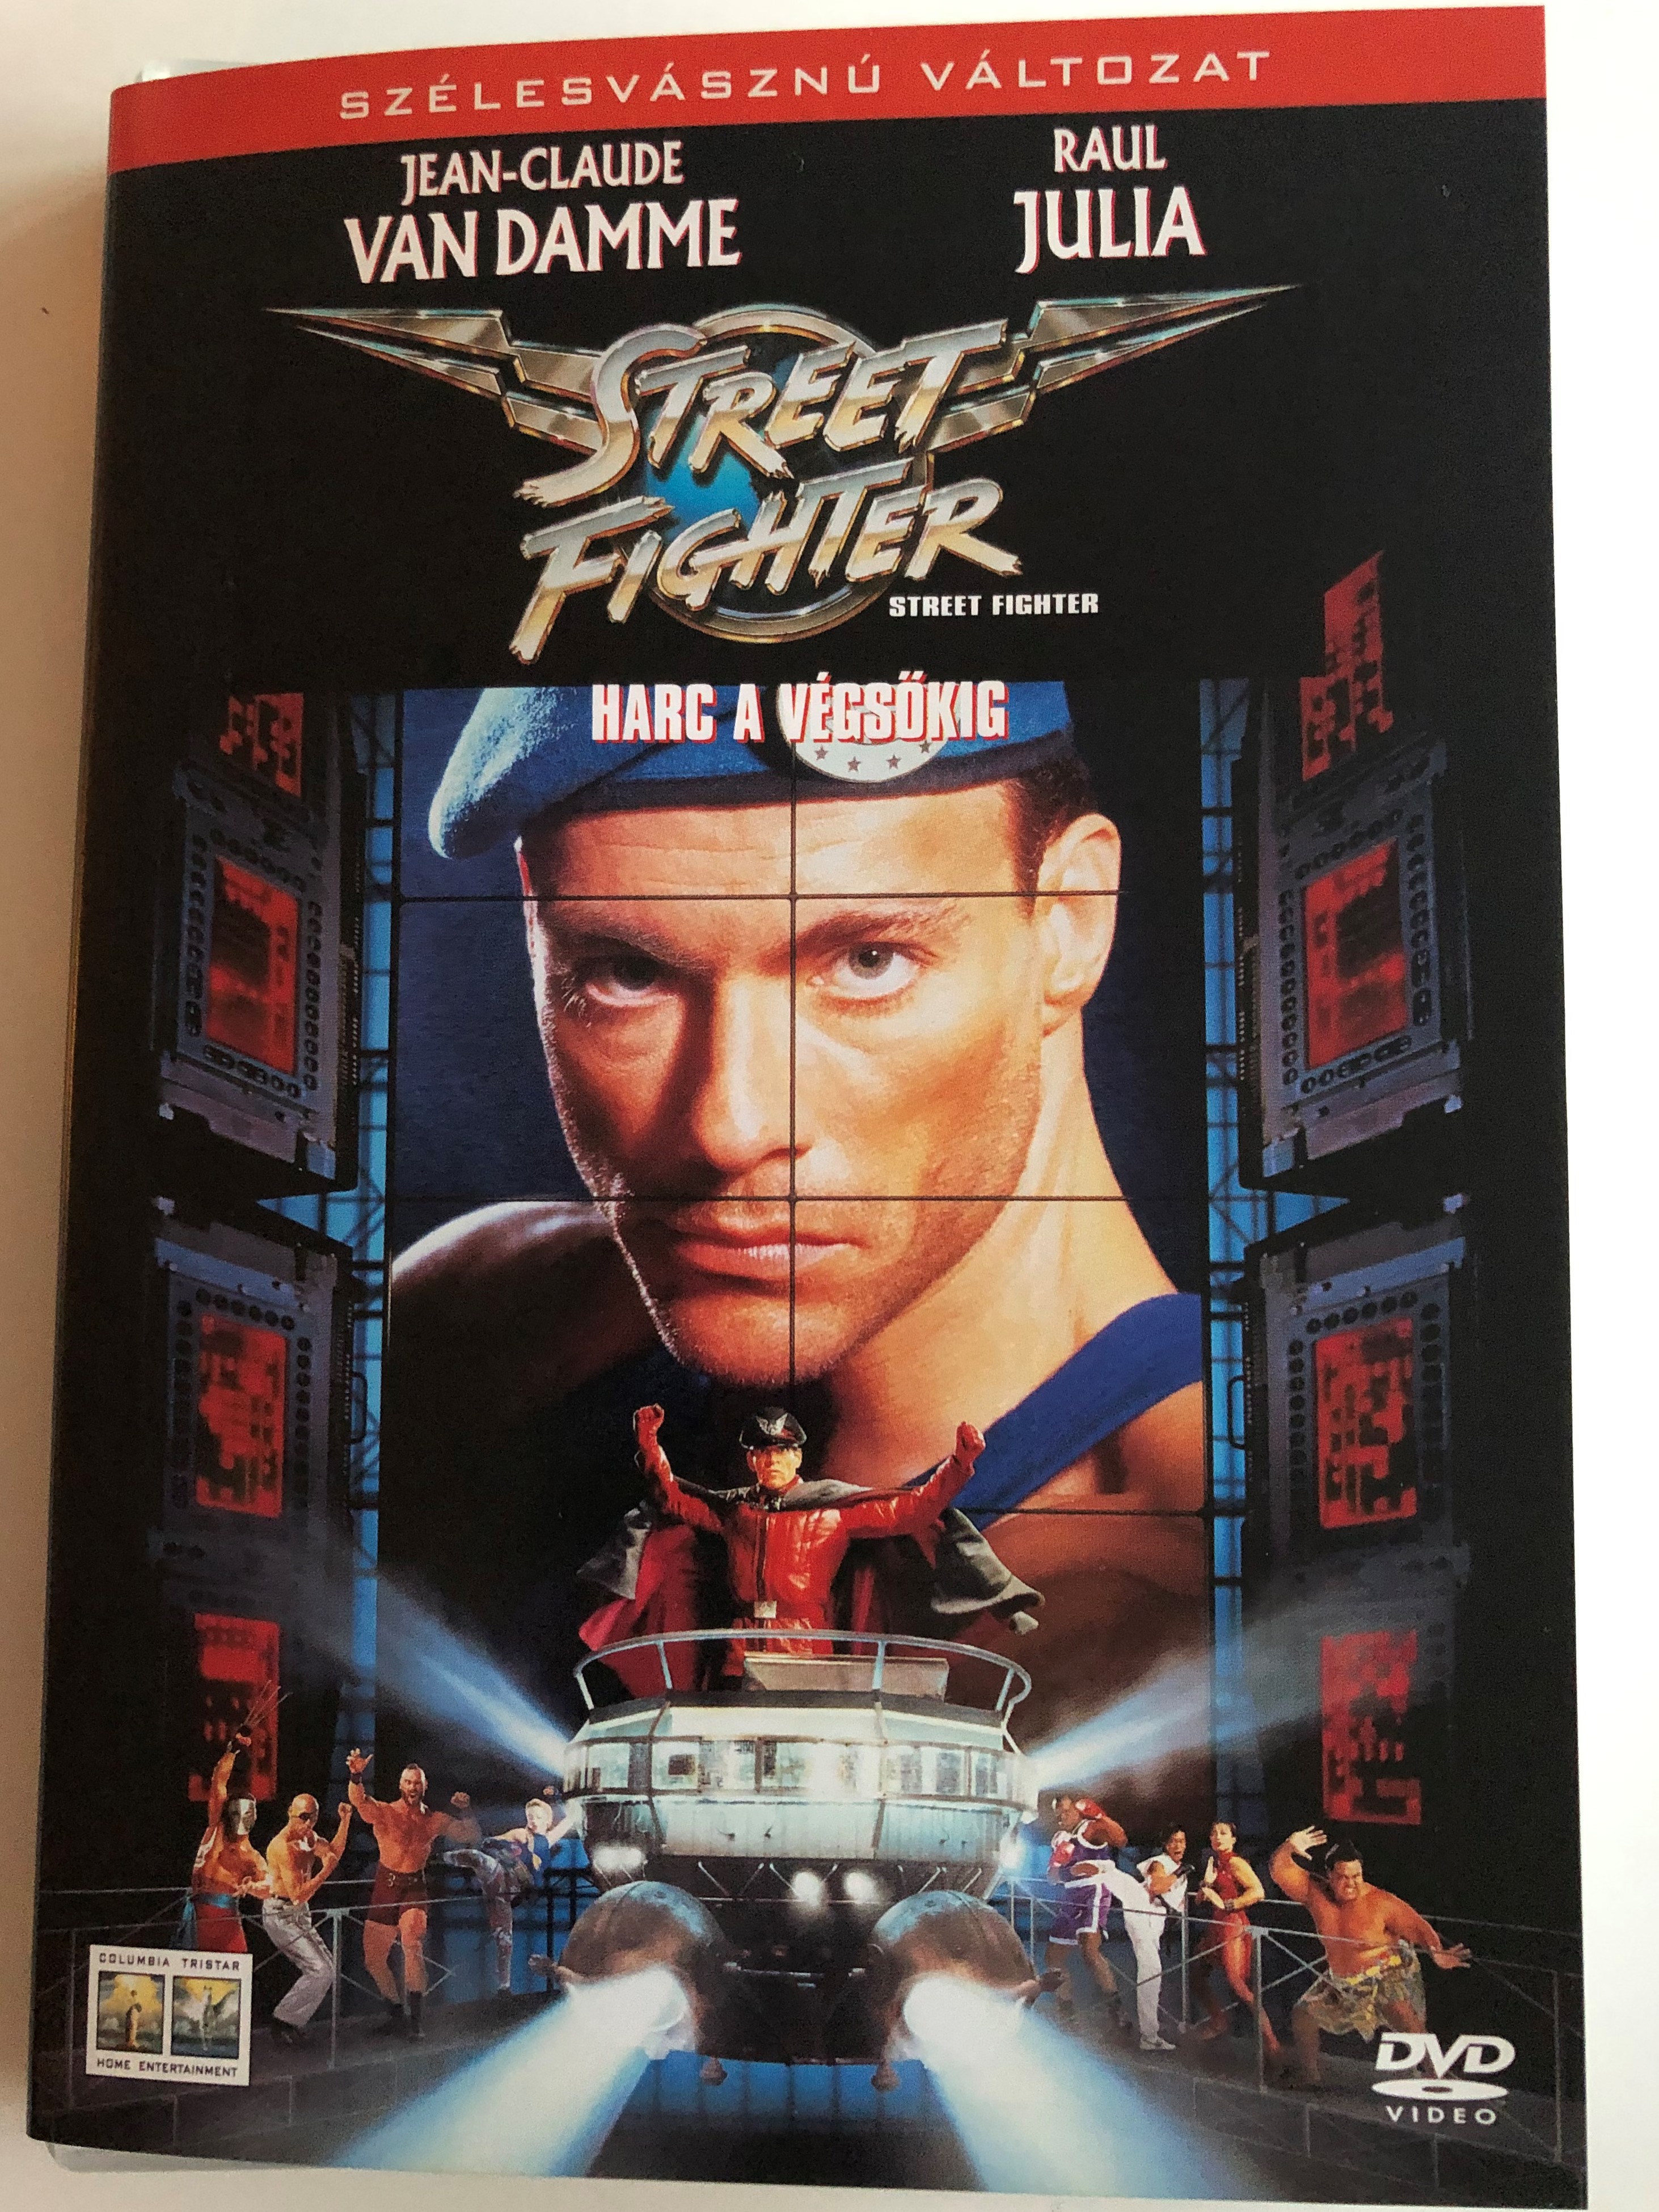 street-fighter-dvd-1994-harc-a-v-gs-kig-directed-by-steven-e.-de-souza-1.jpg